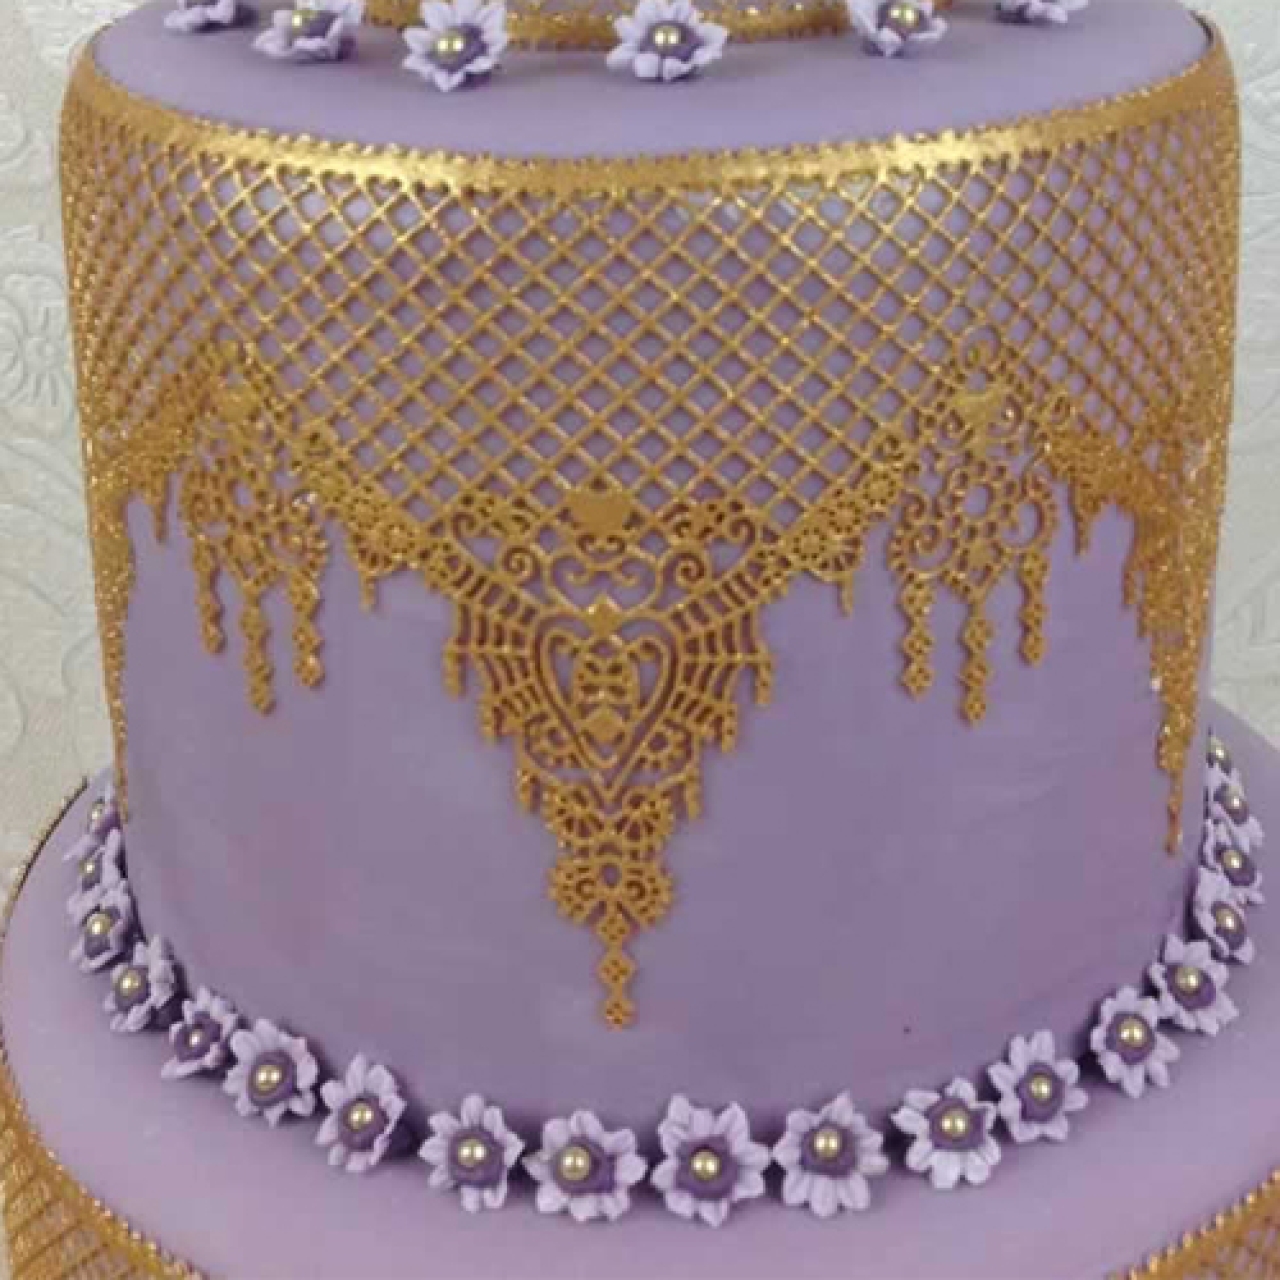 Cake Lace Silikonform für essbare Spitze "Ophelia" | MEINCUPCAKE Shop